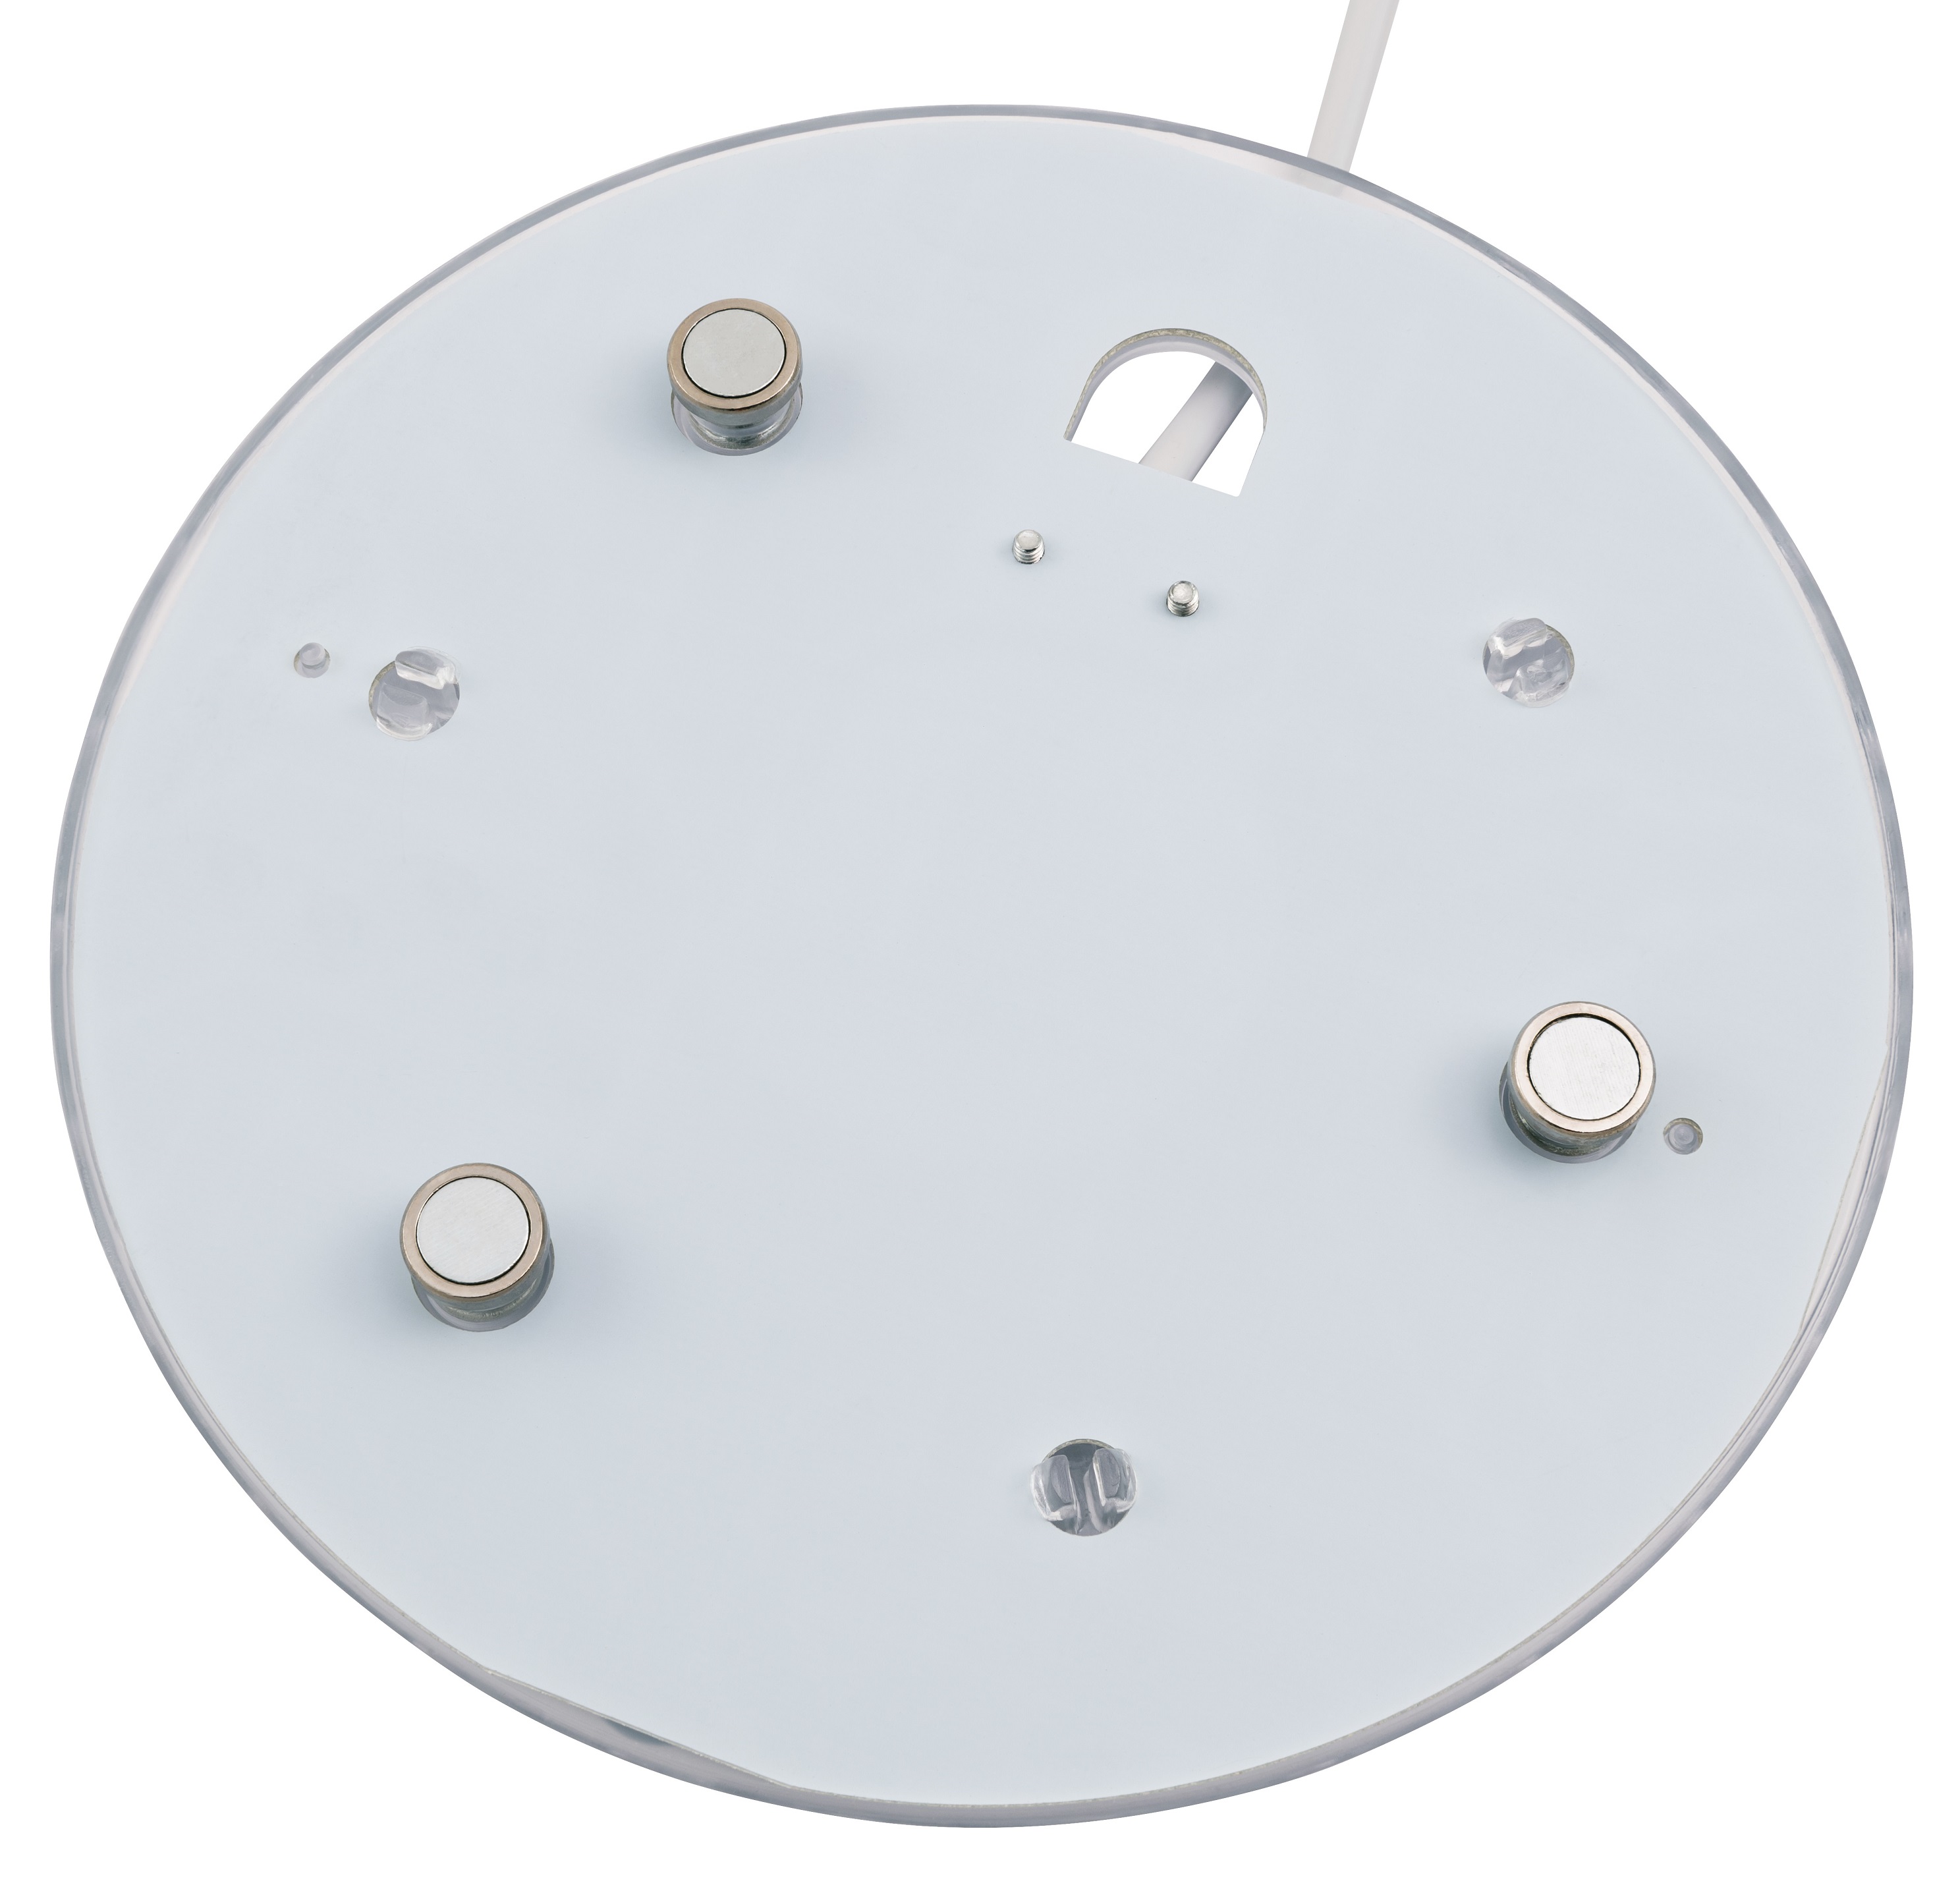 LED-Modul McShine, Umrüstsatz mit Magnethalterung - Bild 2